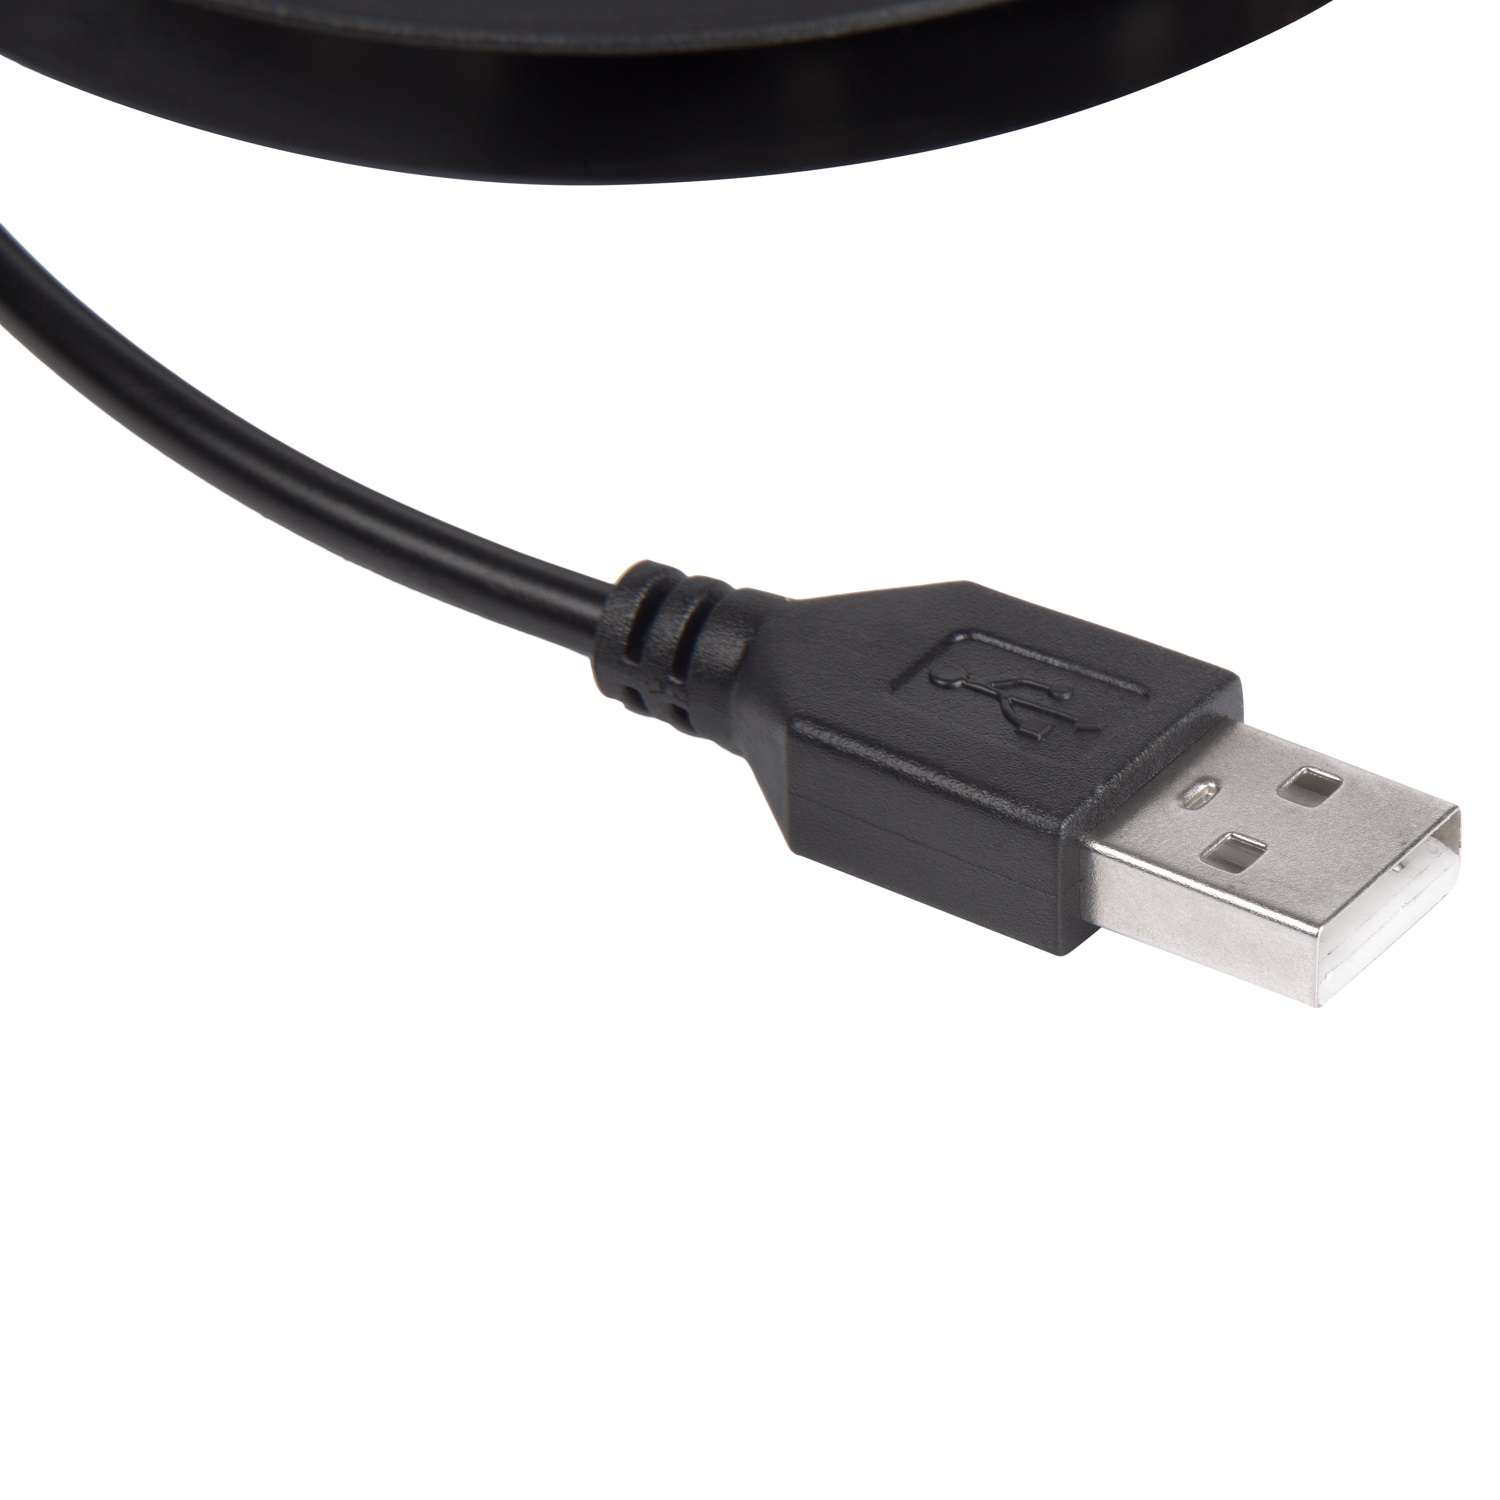 Светодиодная лента LAMPER синяя USB с клеевым основанием для подсветки телевизора и компьютера - фото 3